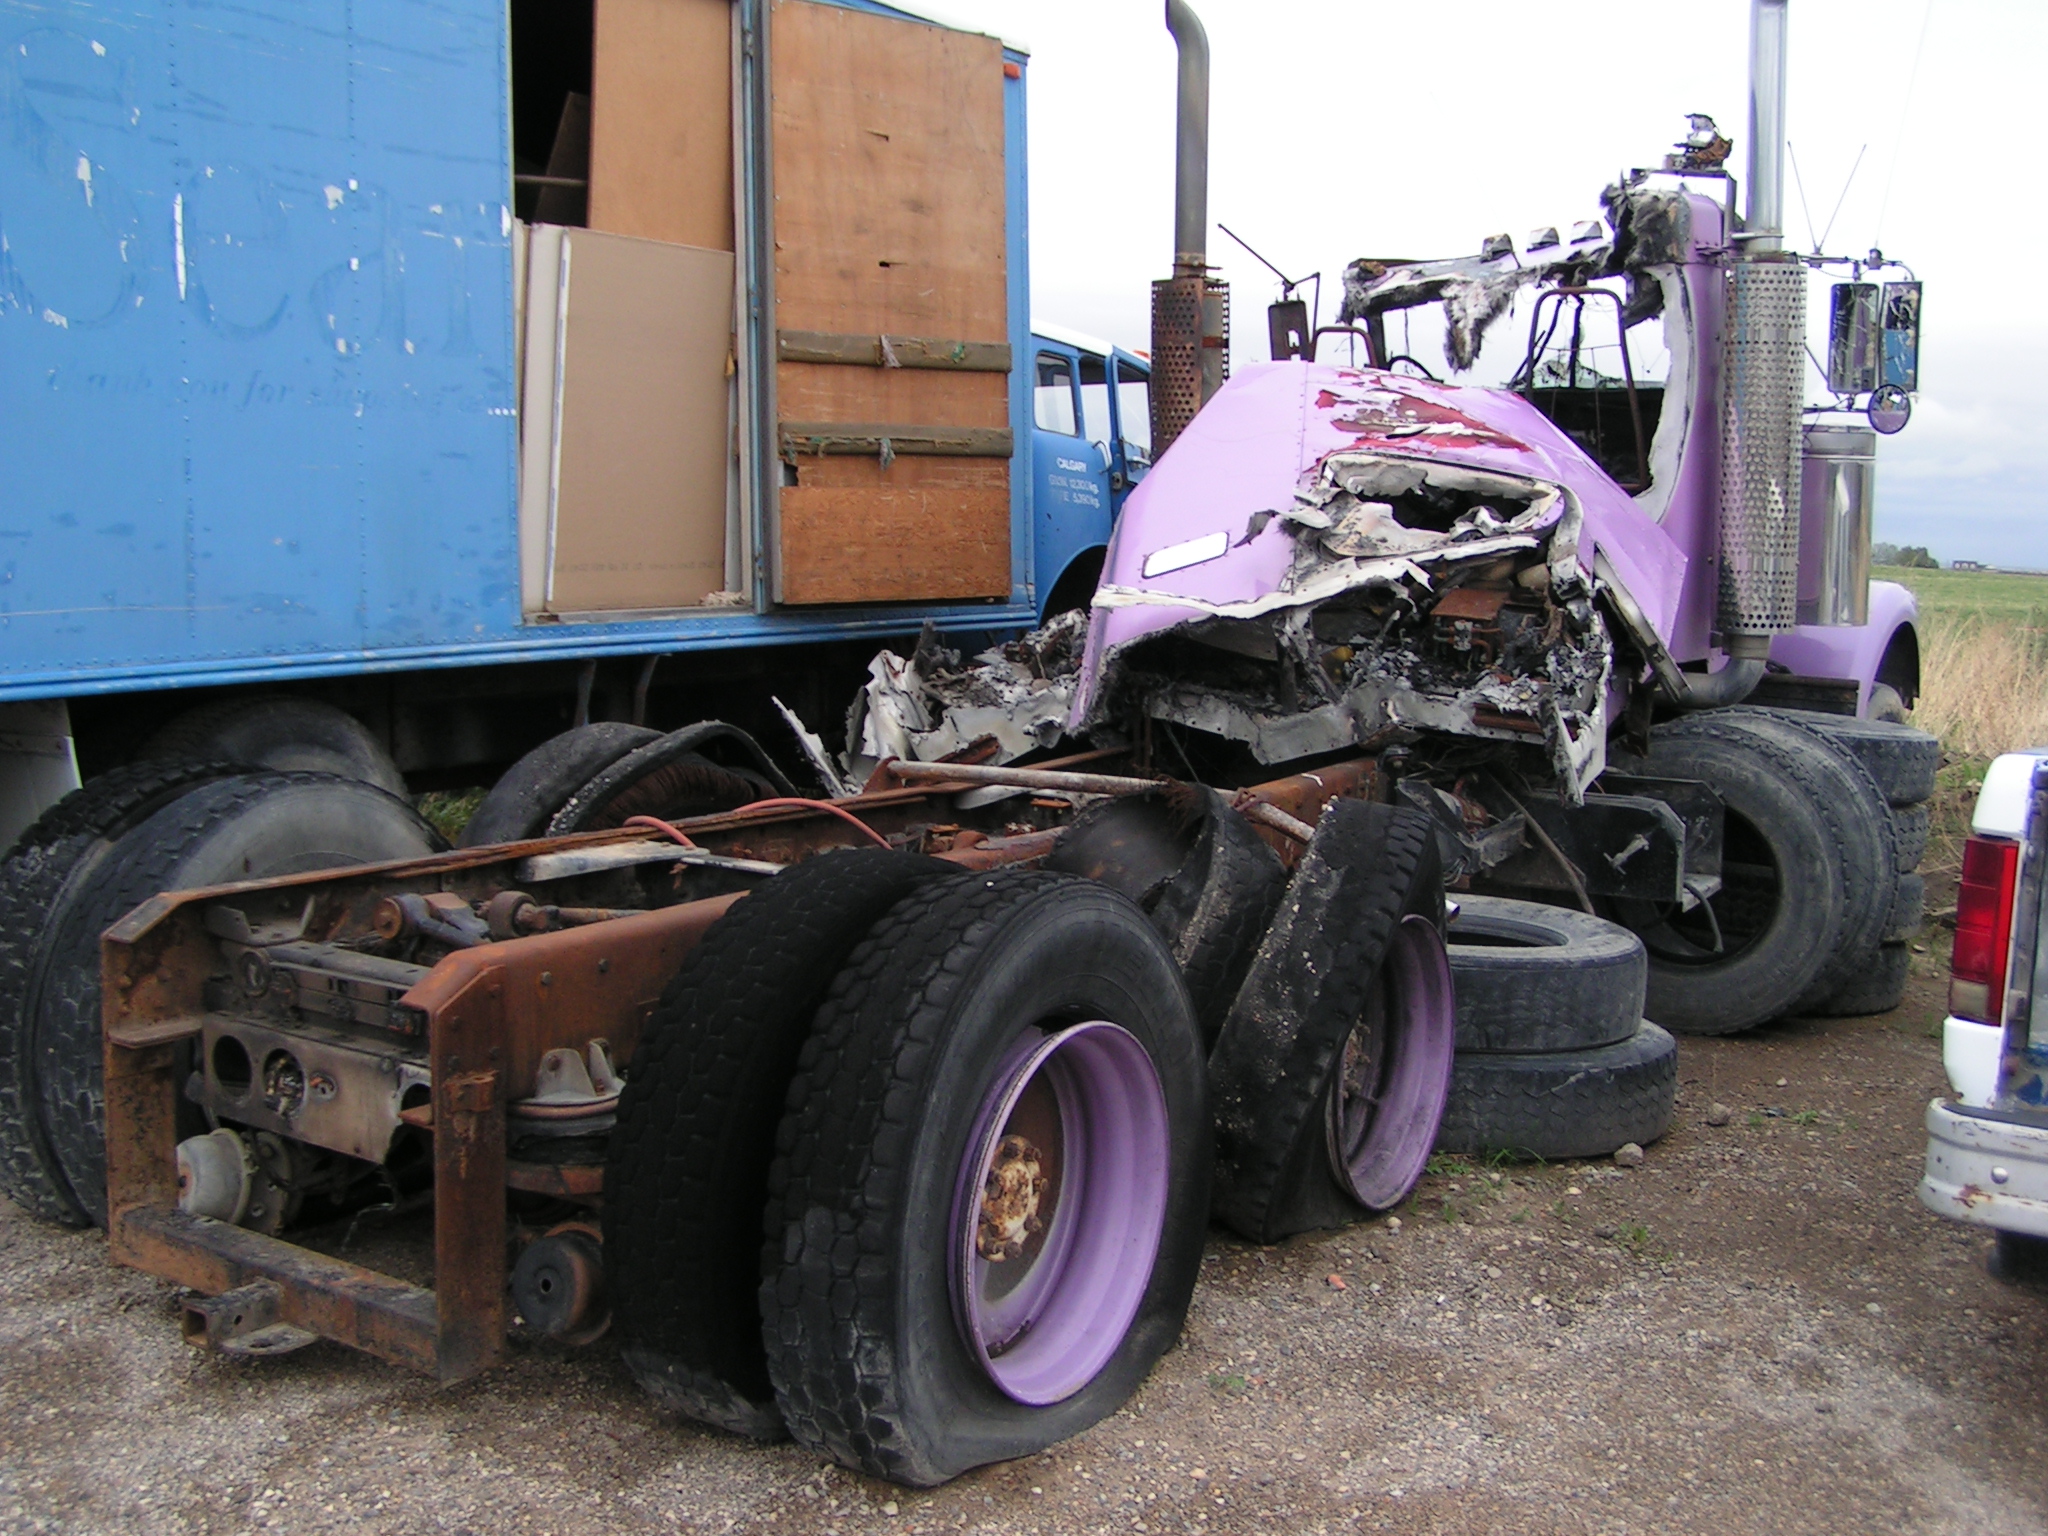 File:Smashed Semi-Truck (2522435761).jpg - Wikimedia Commons